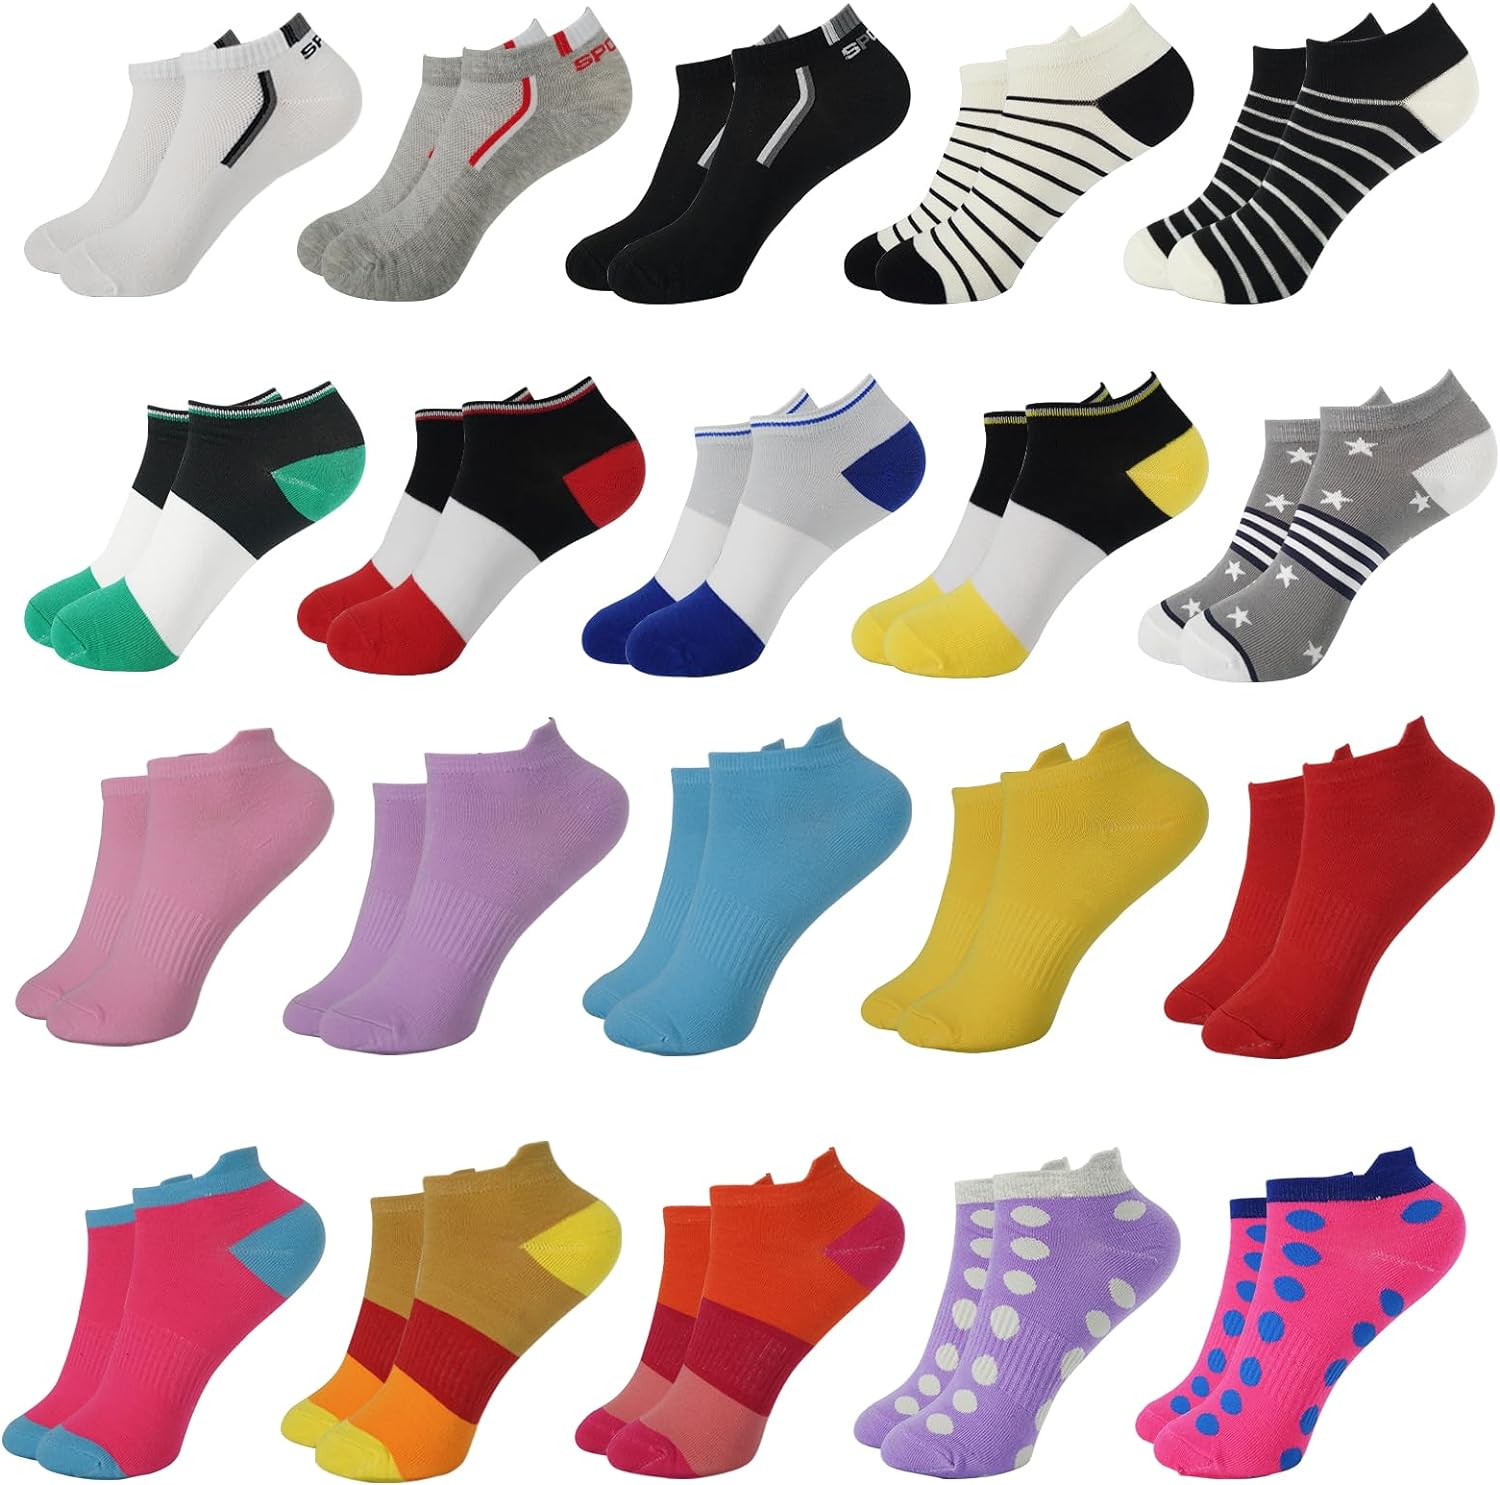 JDHXBMW Women Low Cut Ankle Socks Athletic Socks No Show Colorful